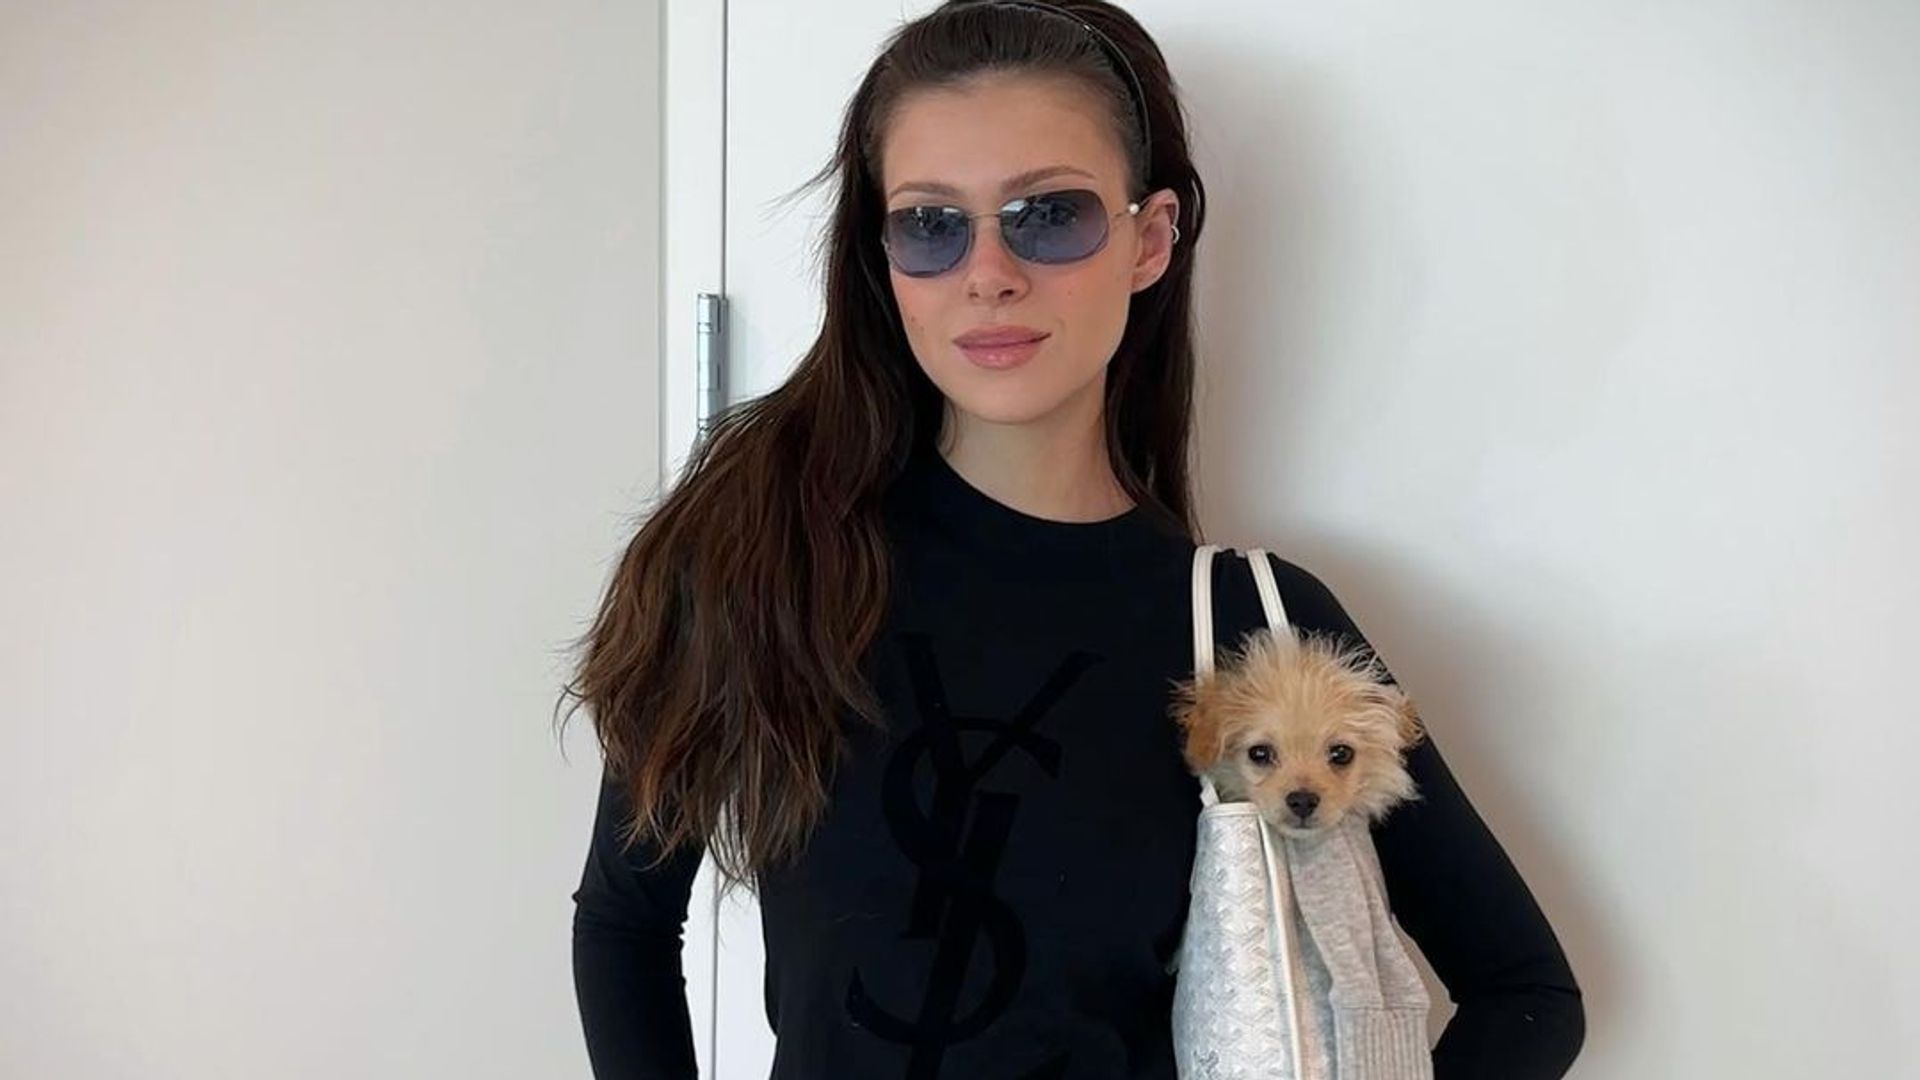 nicola peltz beckham with a dog in a handbag